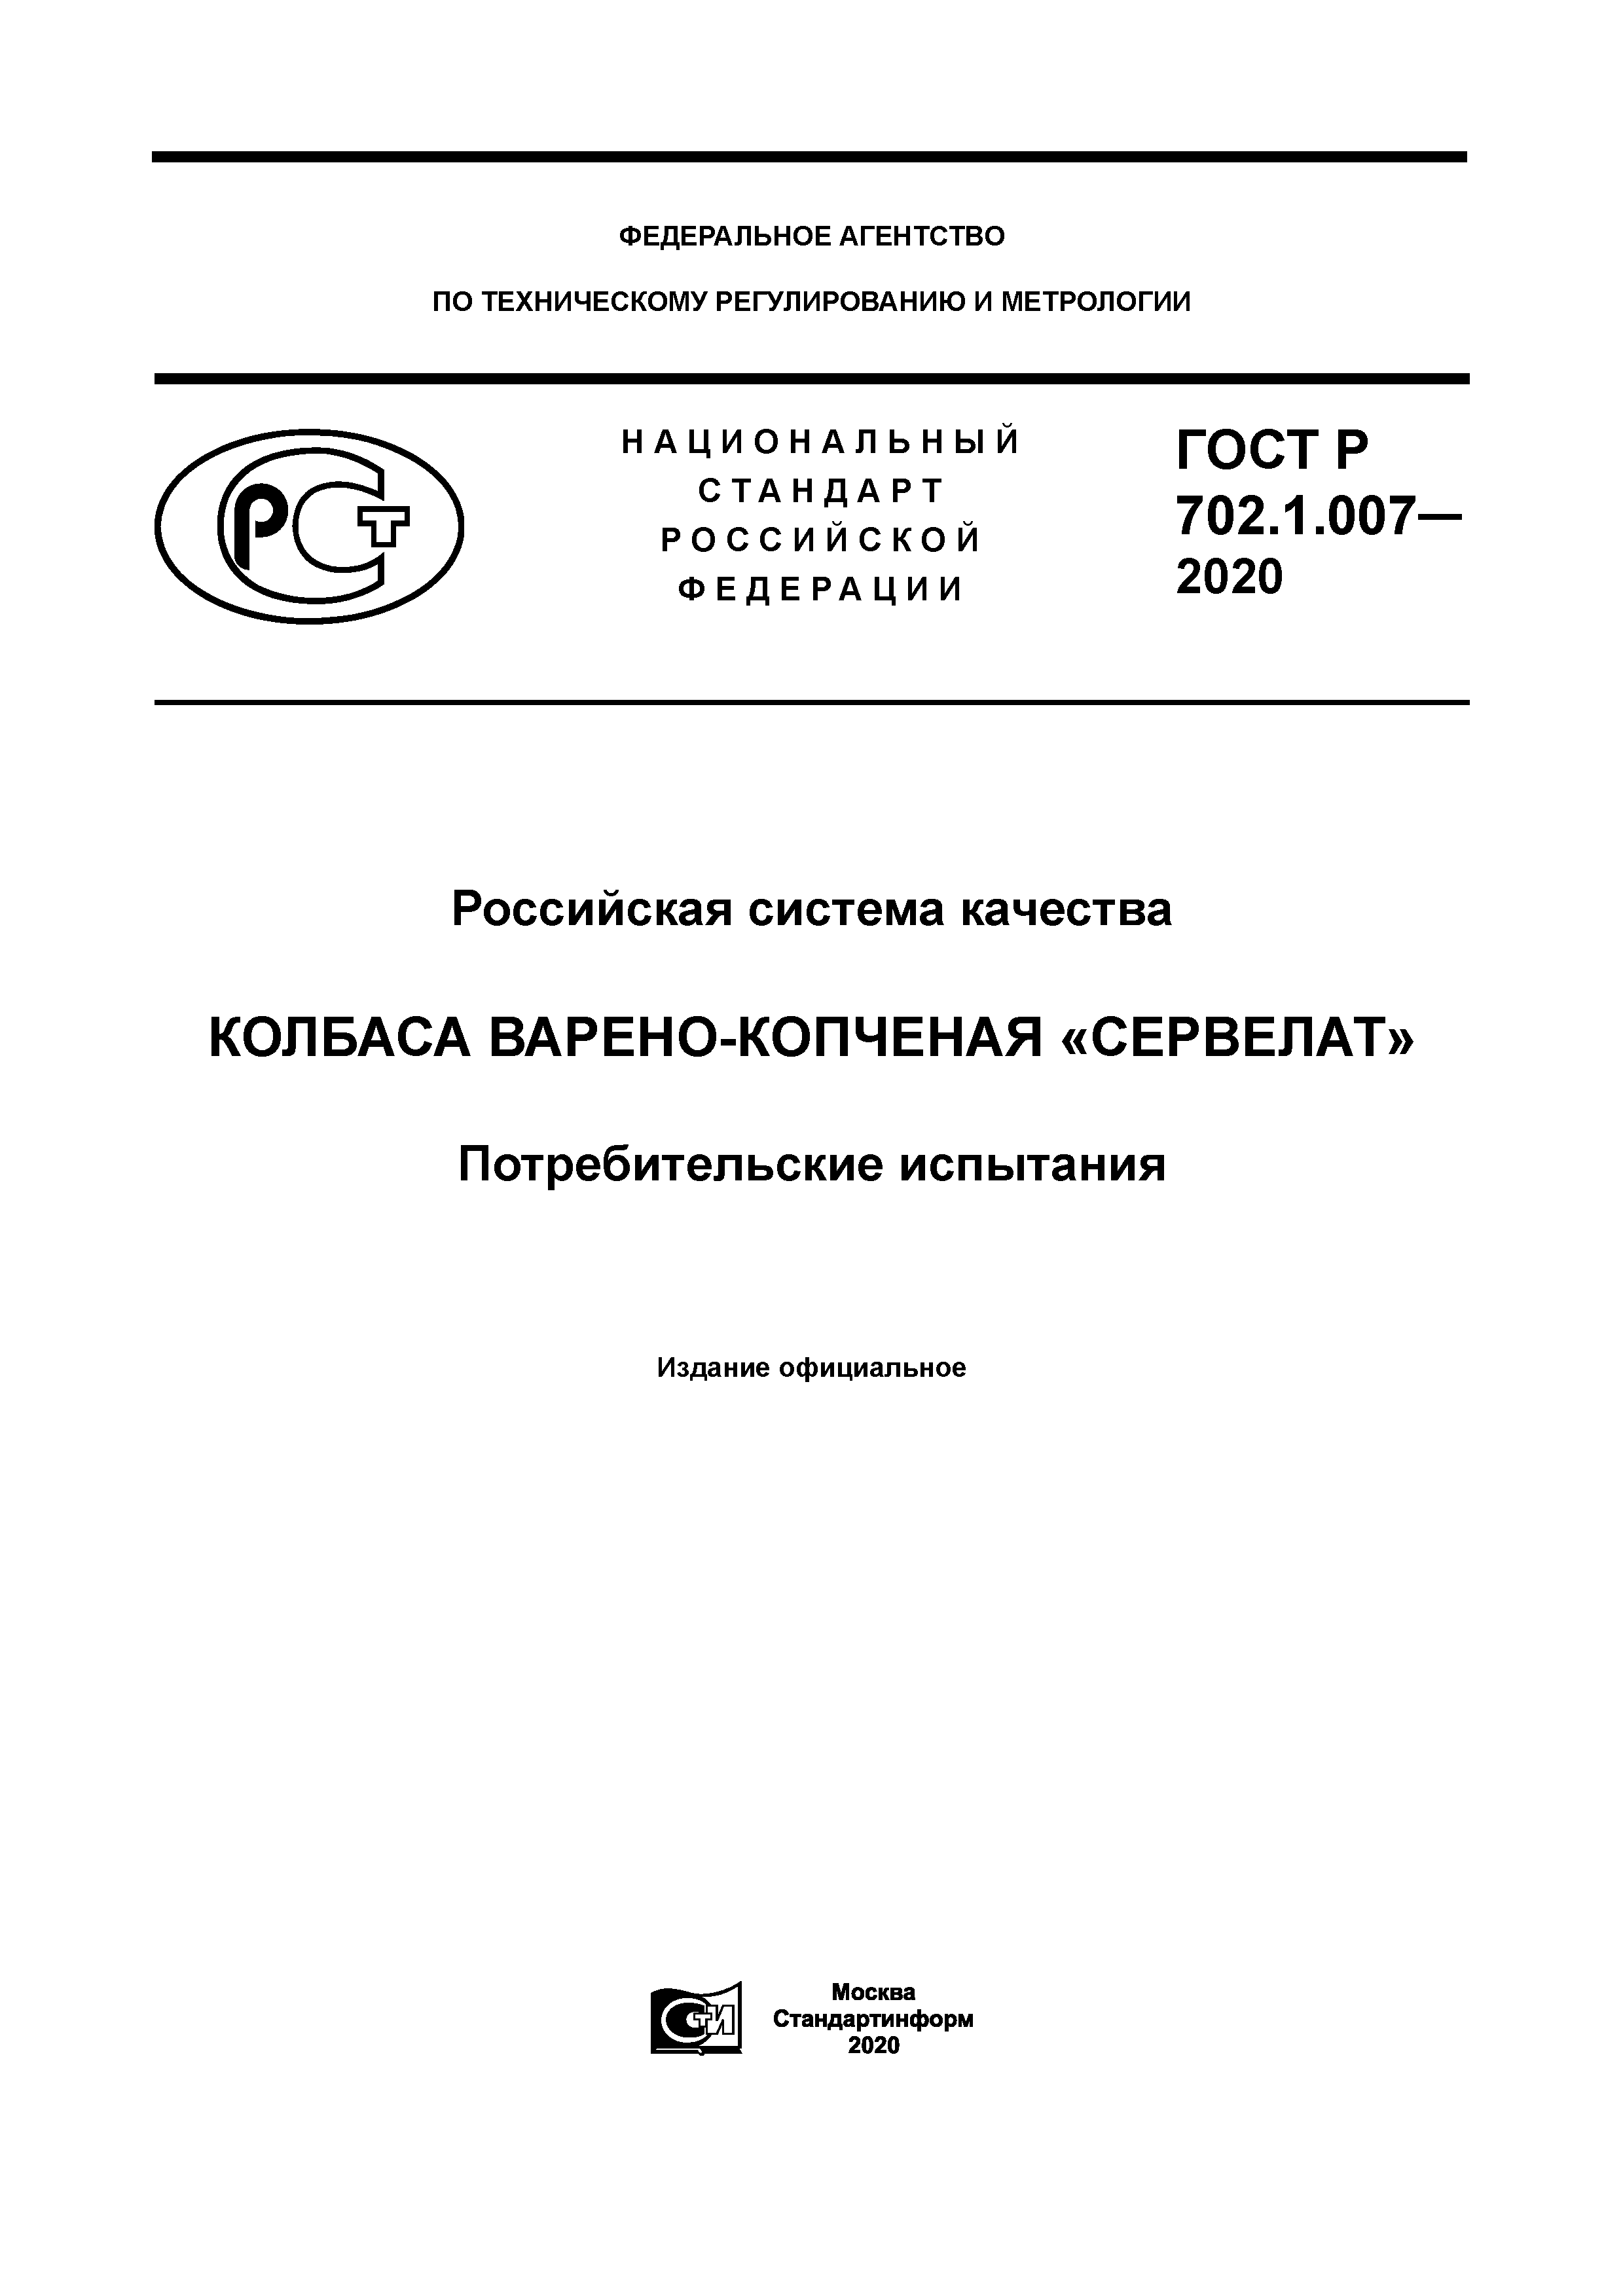 ГОСТ Р 702.1.007-2020